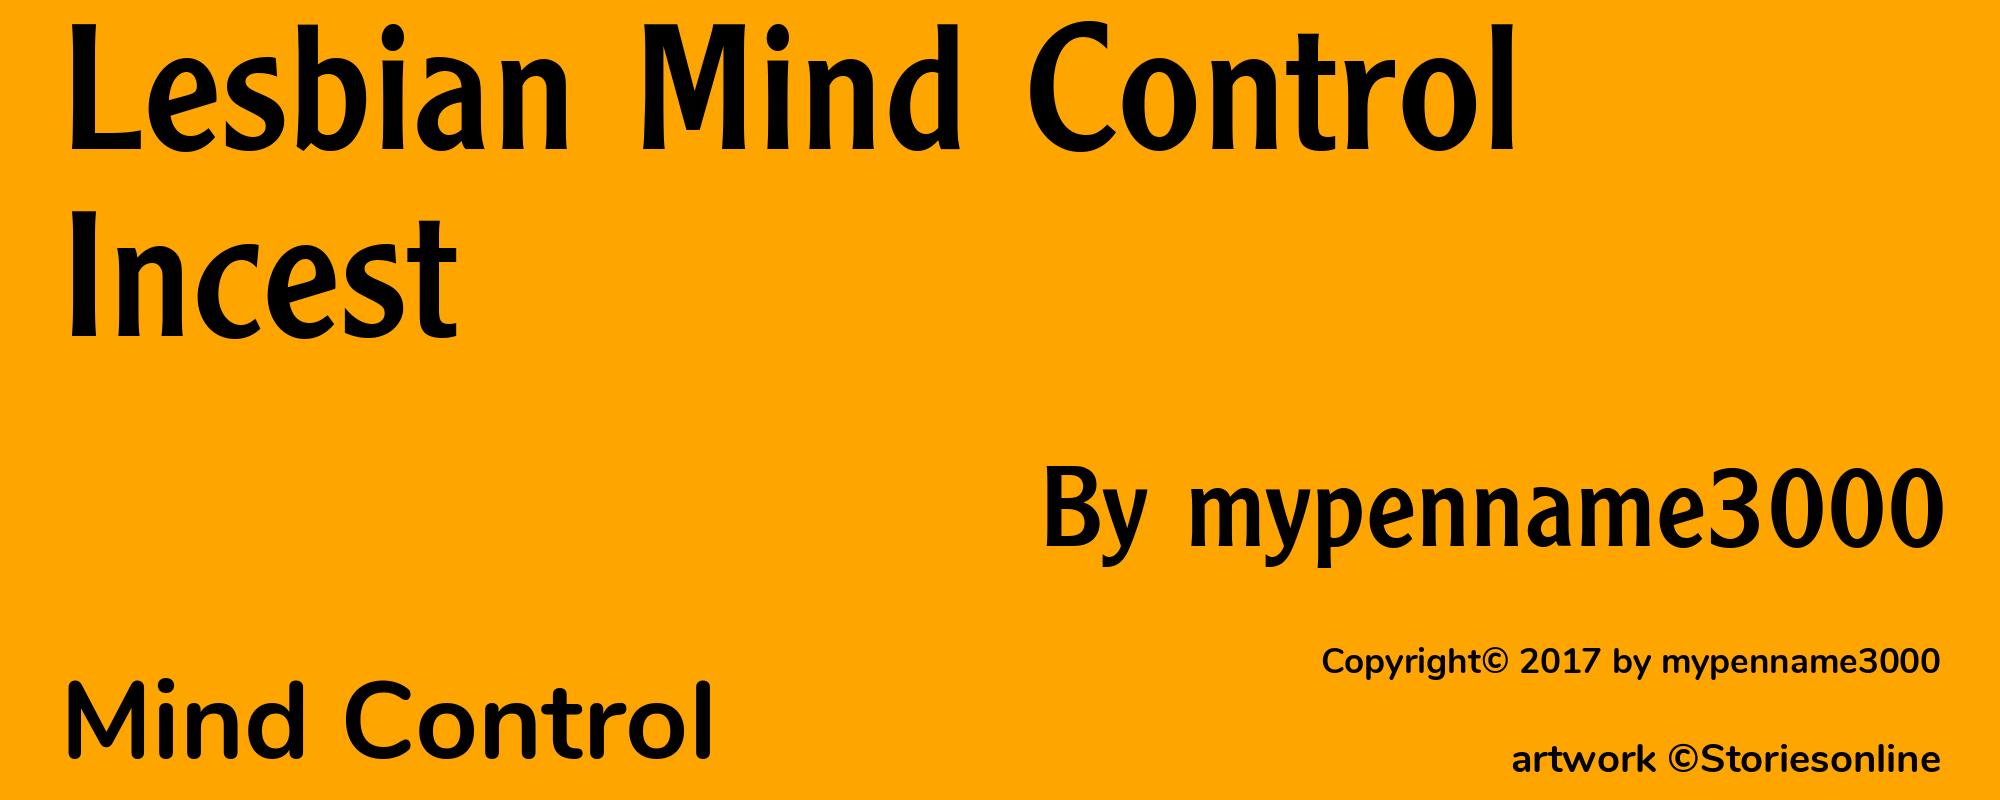 Lesbian Mind Control Incest - Cover